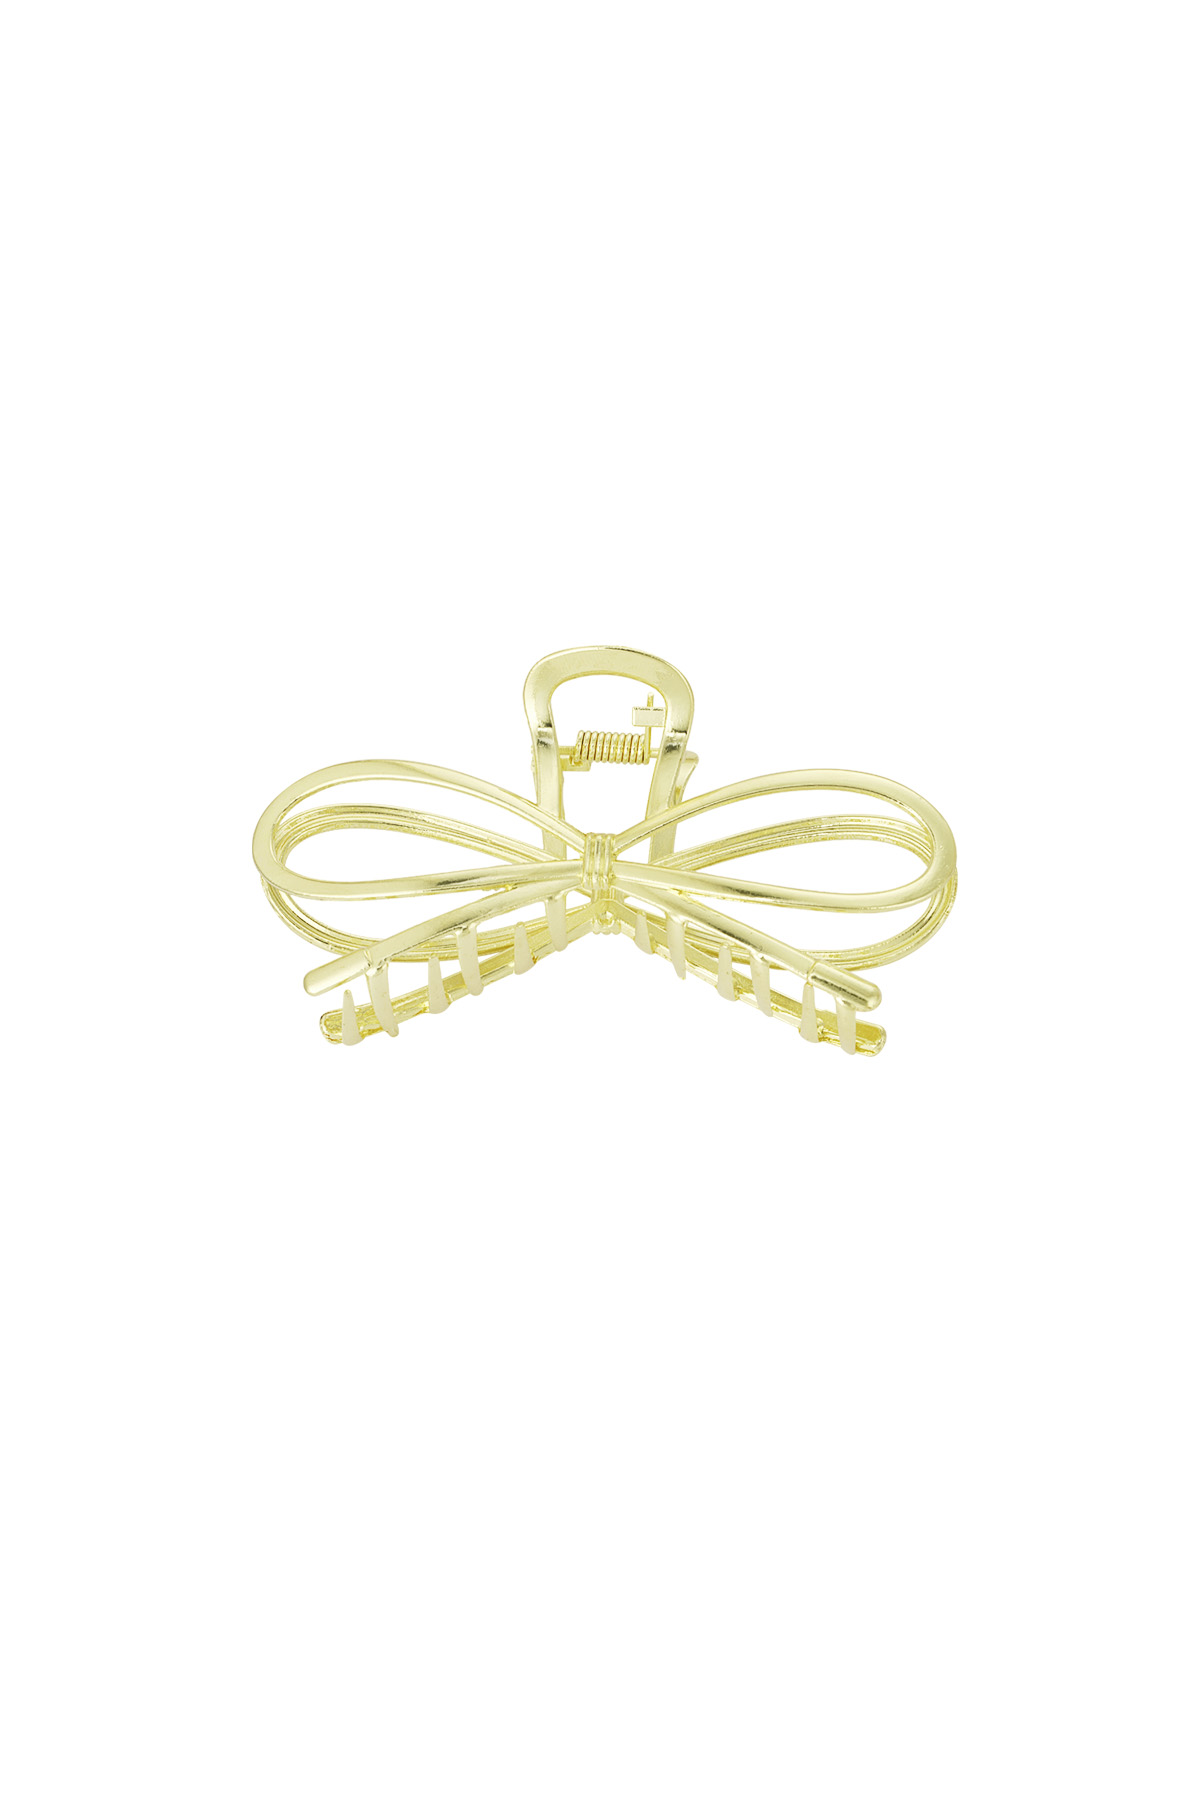 Hair clip bow babe - gold